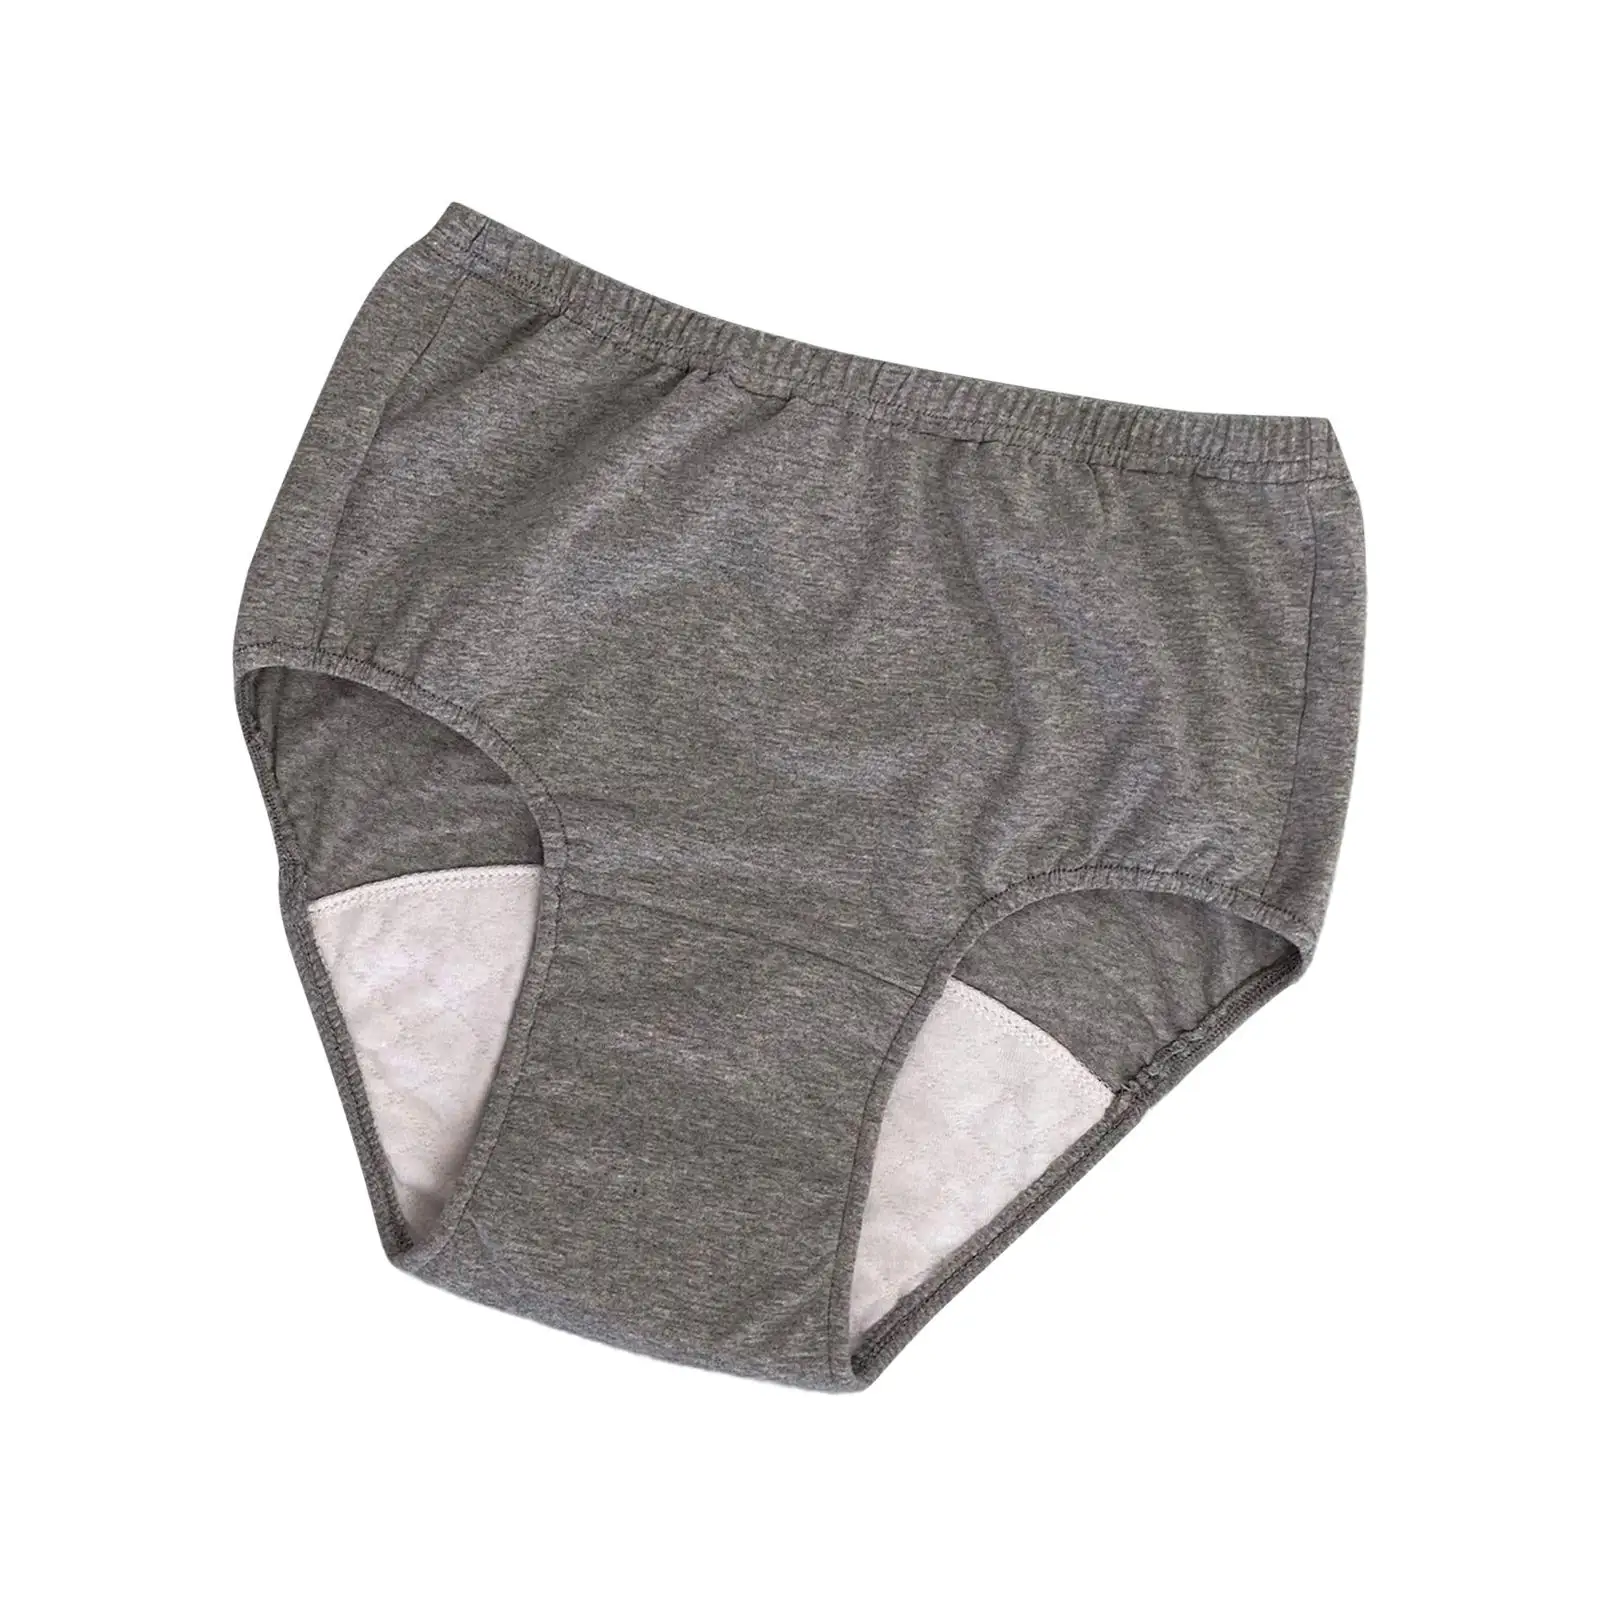 Elderly Diaper Underwear Reusable Washable Nappy for Men Women Adults Elderly Seniors